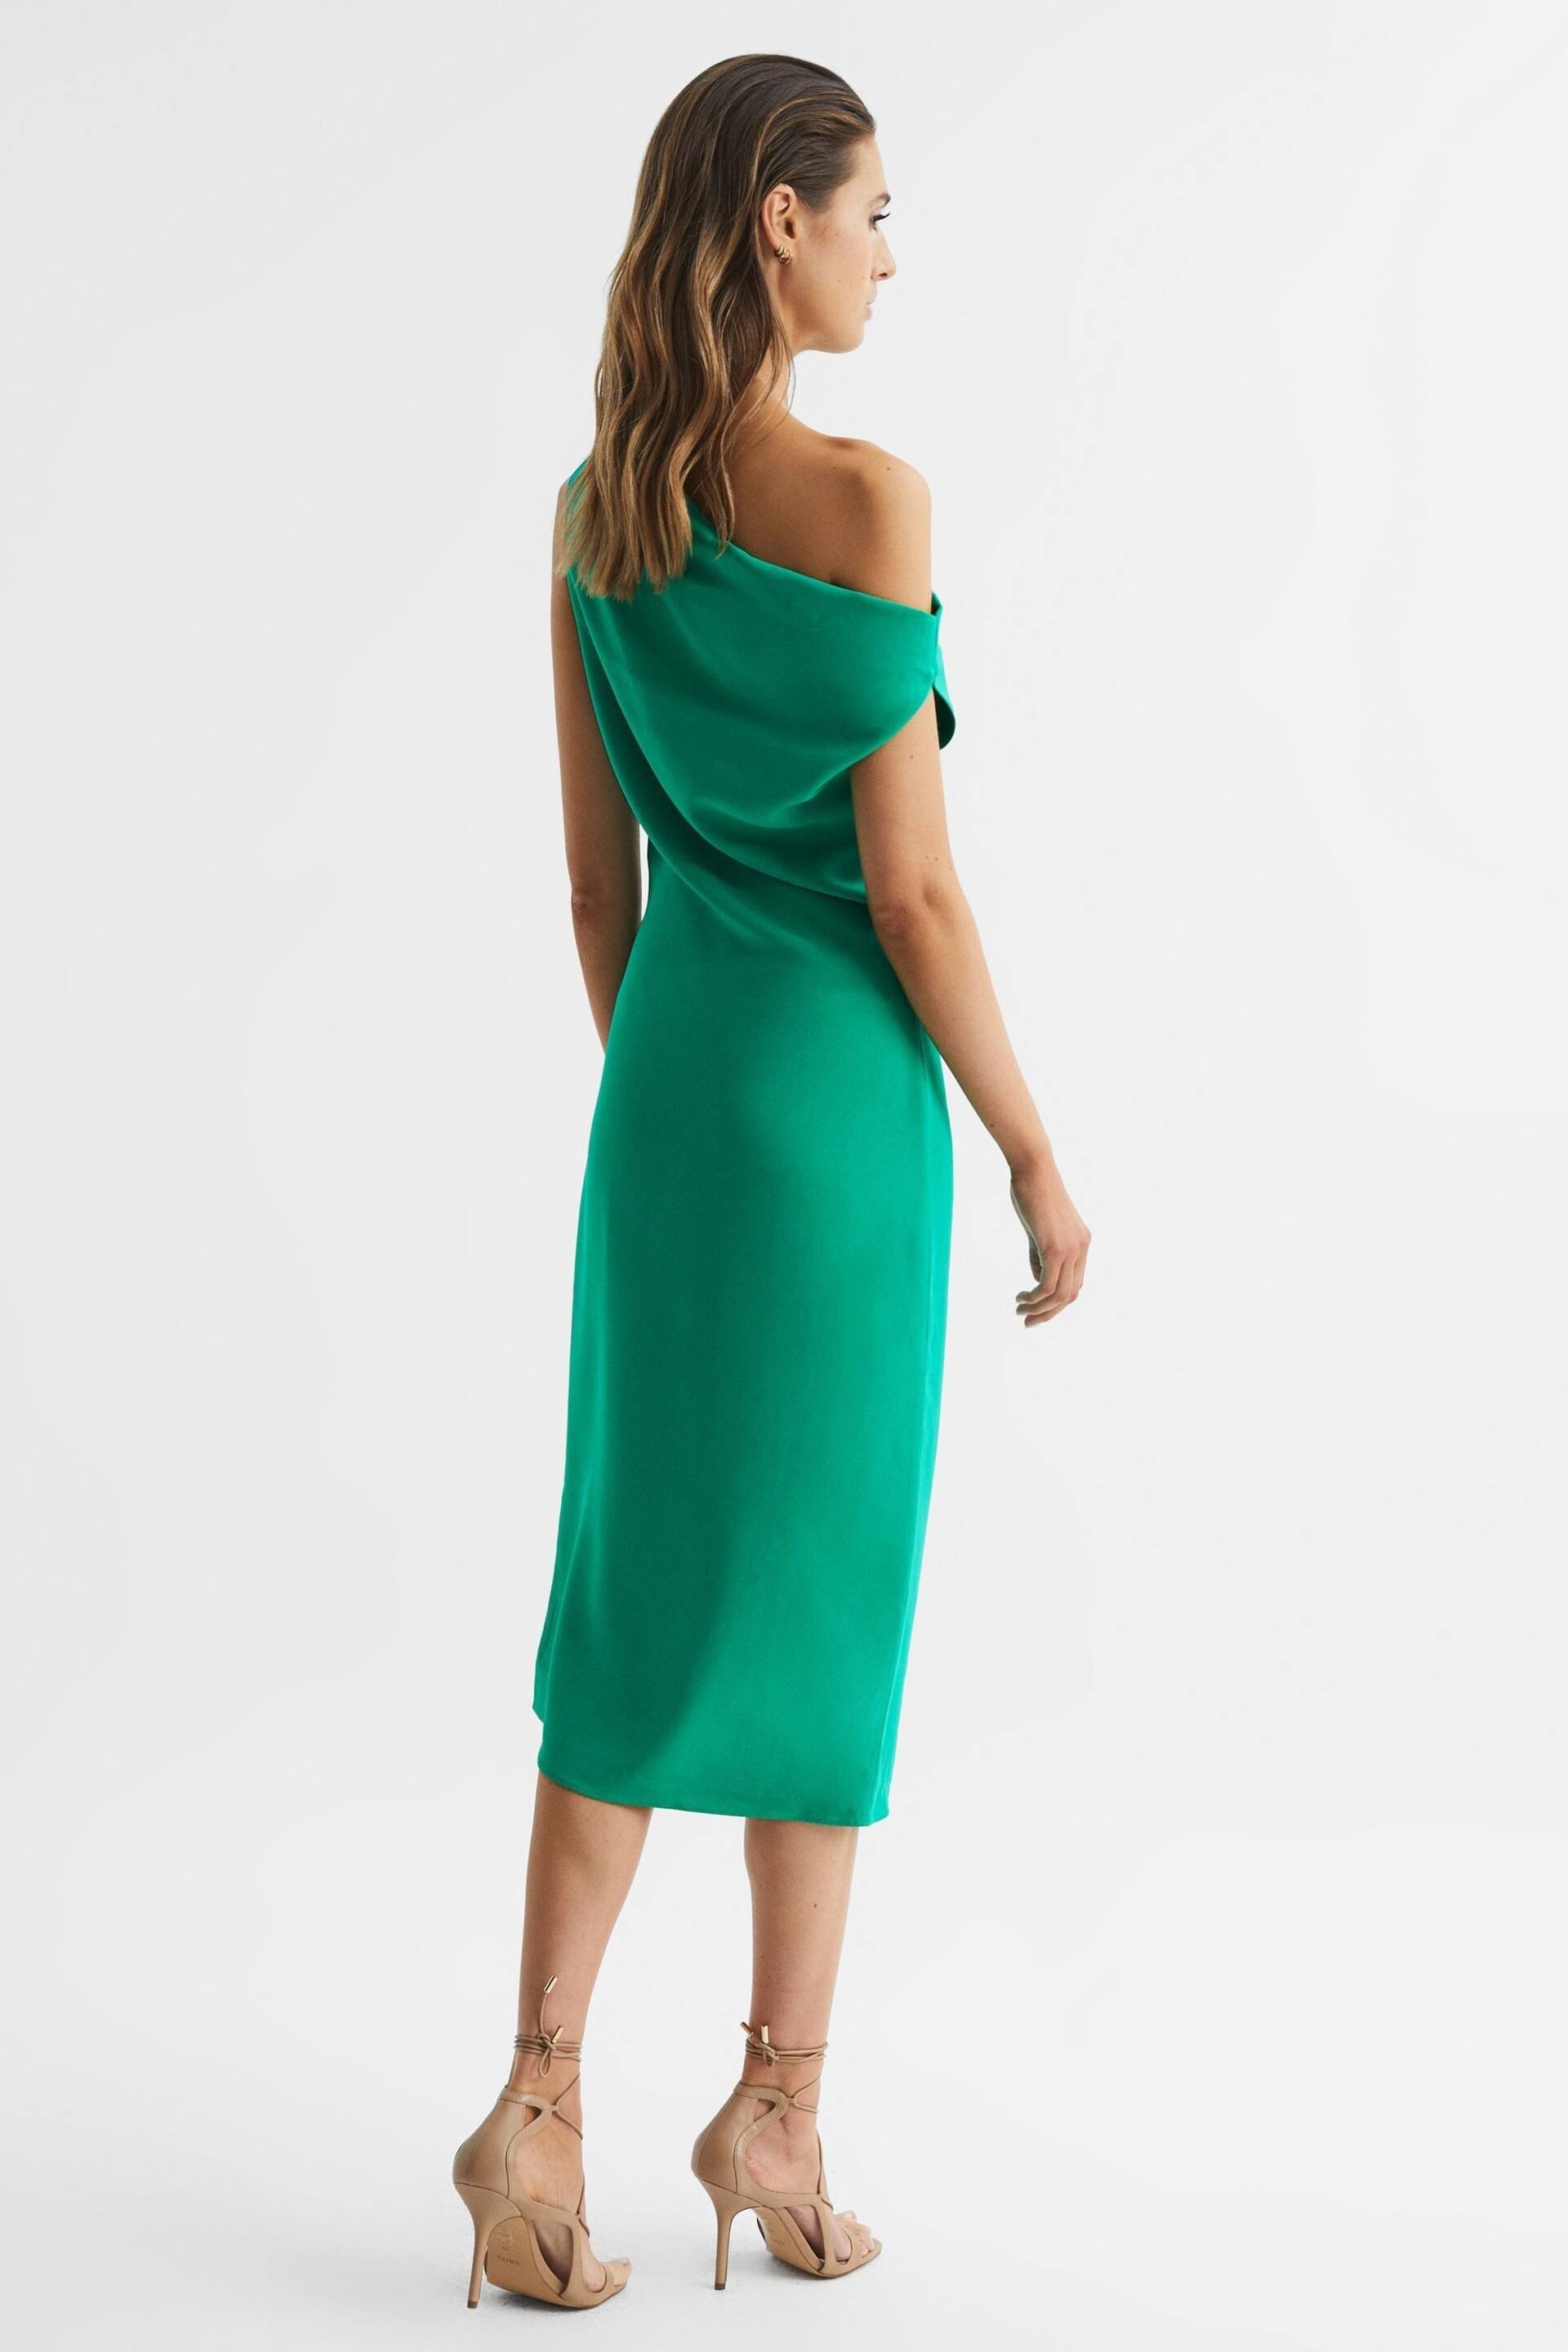 Reiss Green Zaria Off-Shoulder Bodycon Midi Dress - Image 5 of 6